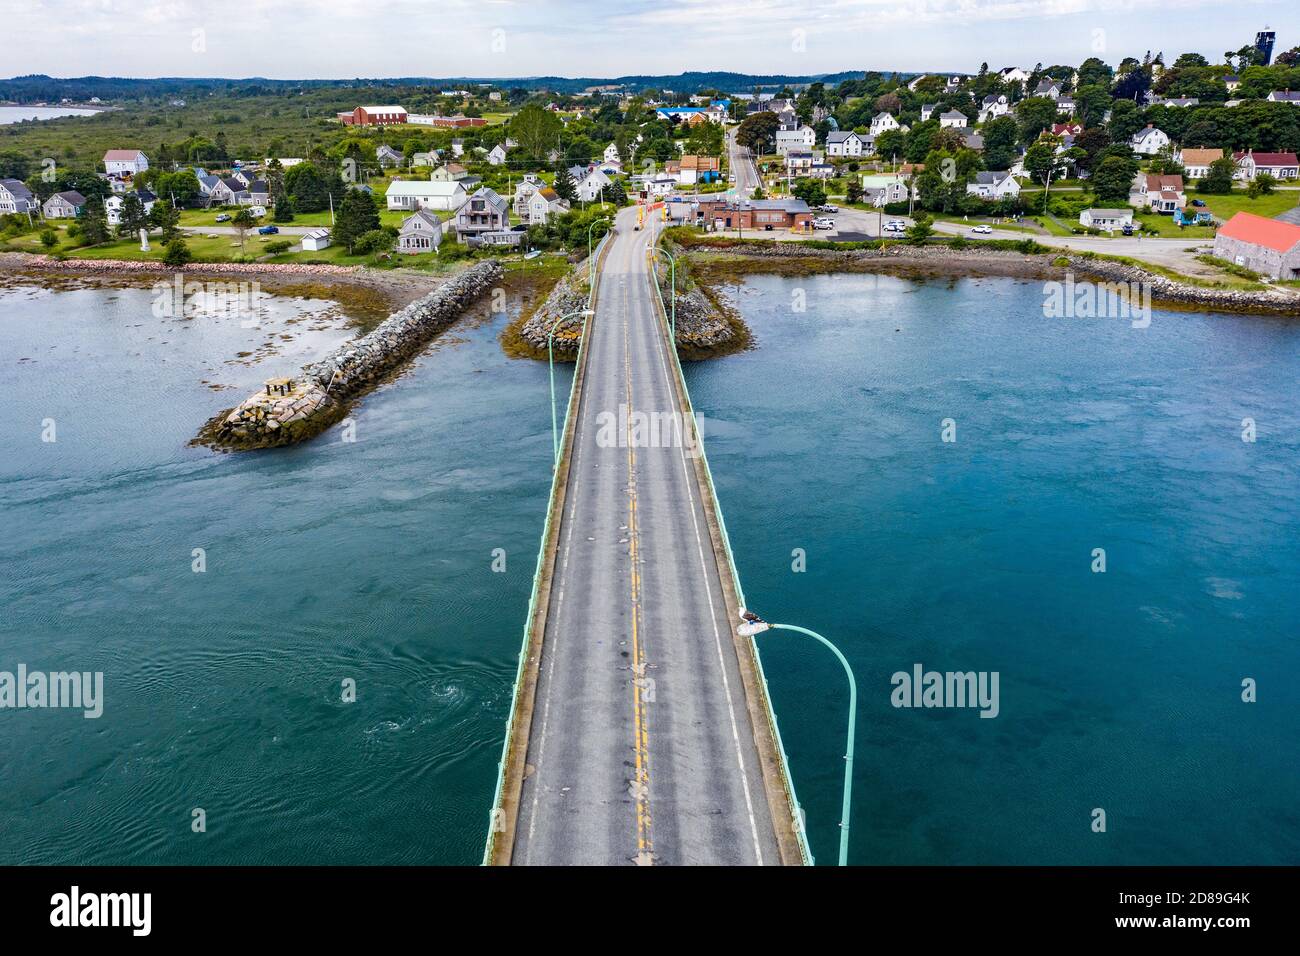 US Zoll und Grenzschutz, USA - Kanada Grenzübergang während COVID-19, Lubec, Maine, USA Stockfoto